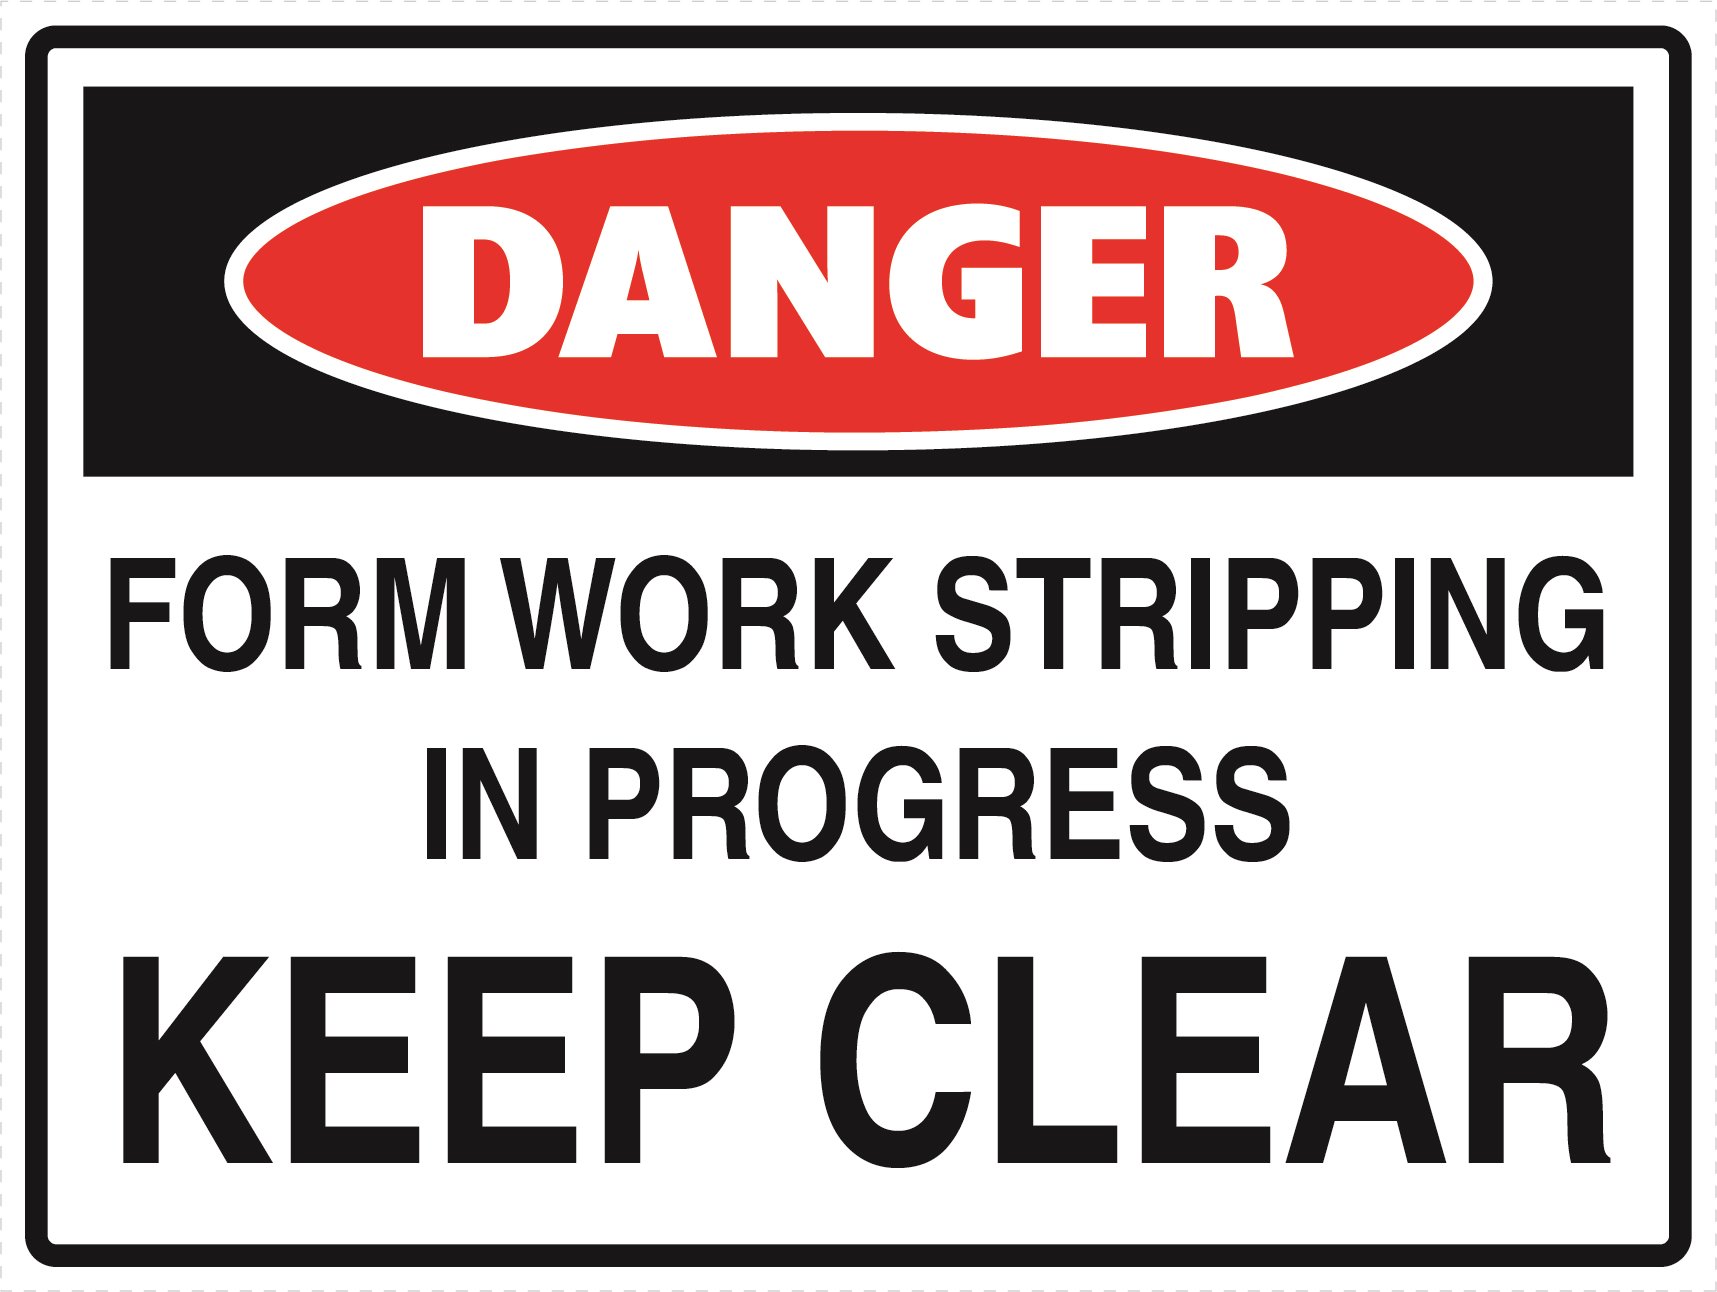 Danger - Form Work Stripping in Progress - Keep Clear